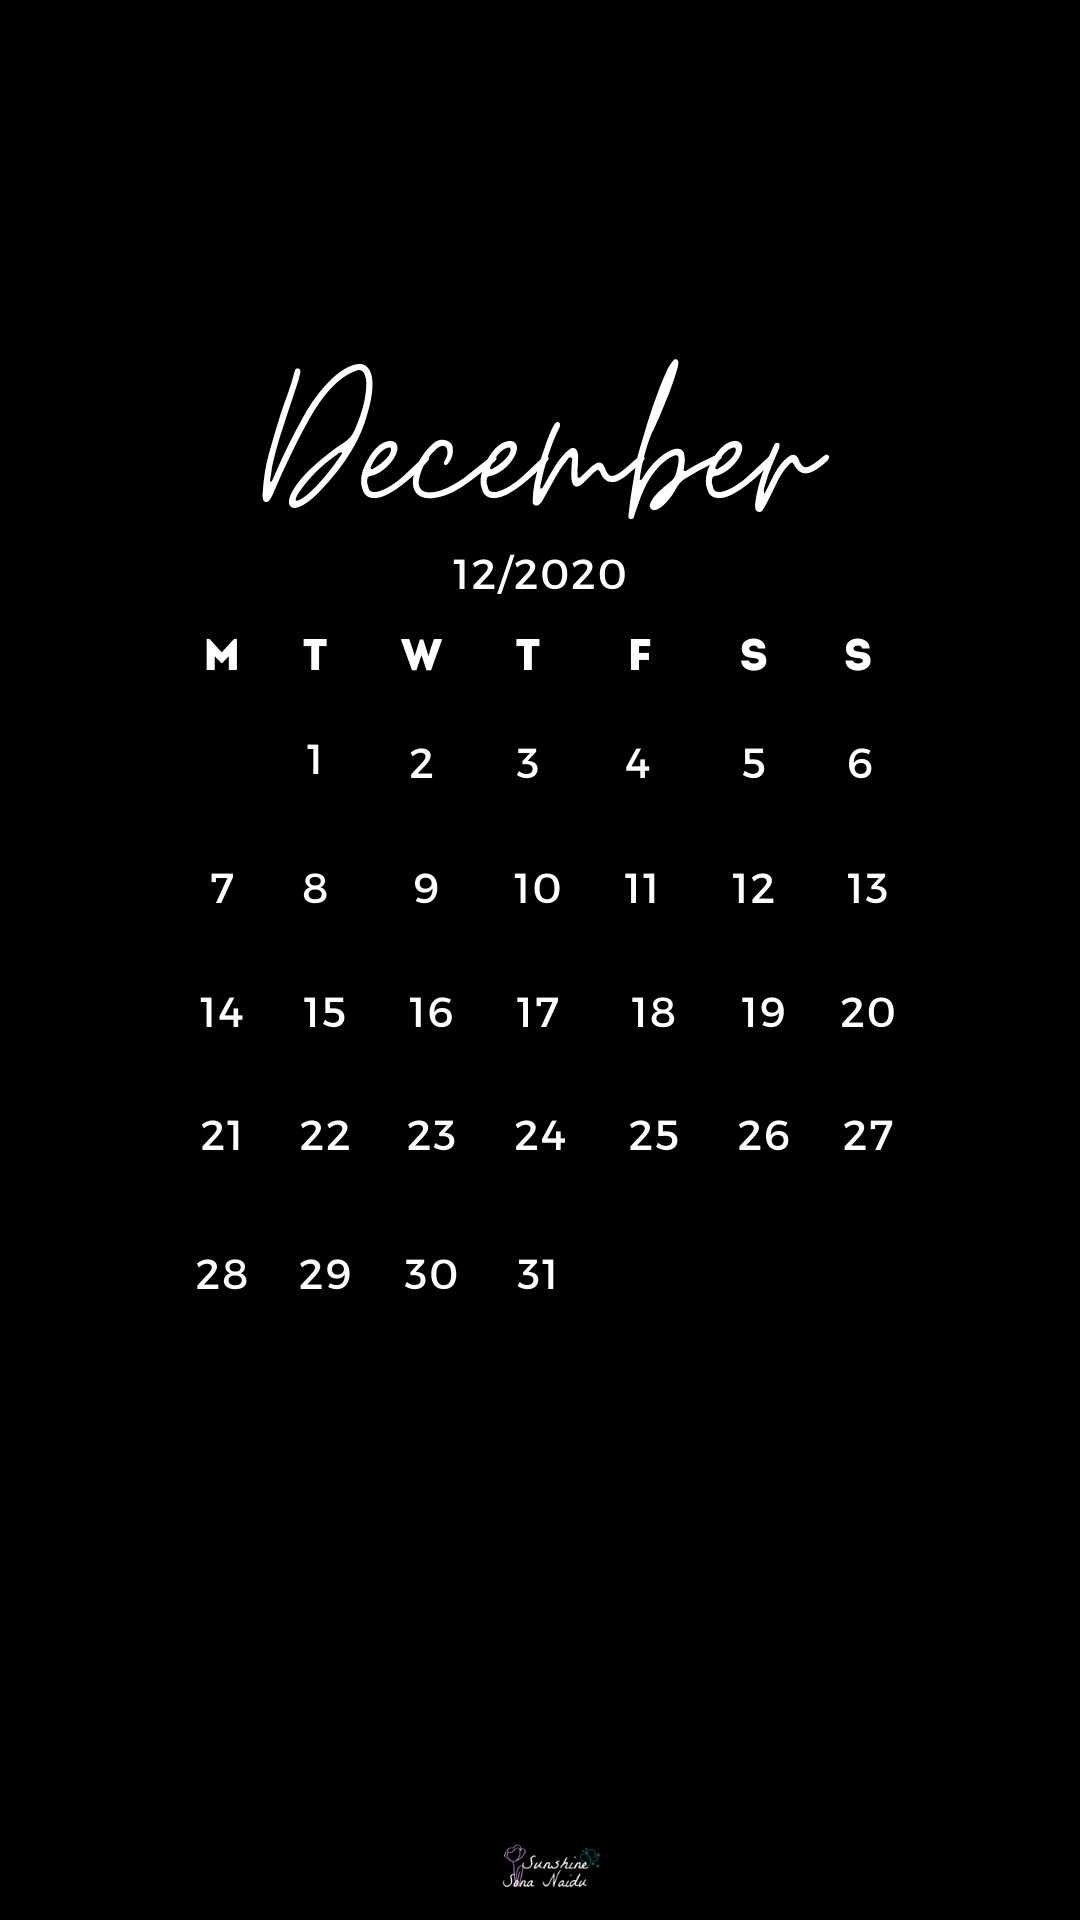 December 2020 wallpaper in 2020 Calendar wallpaper September